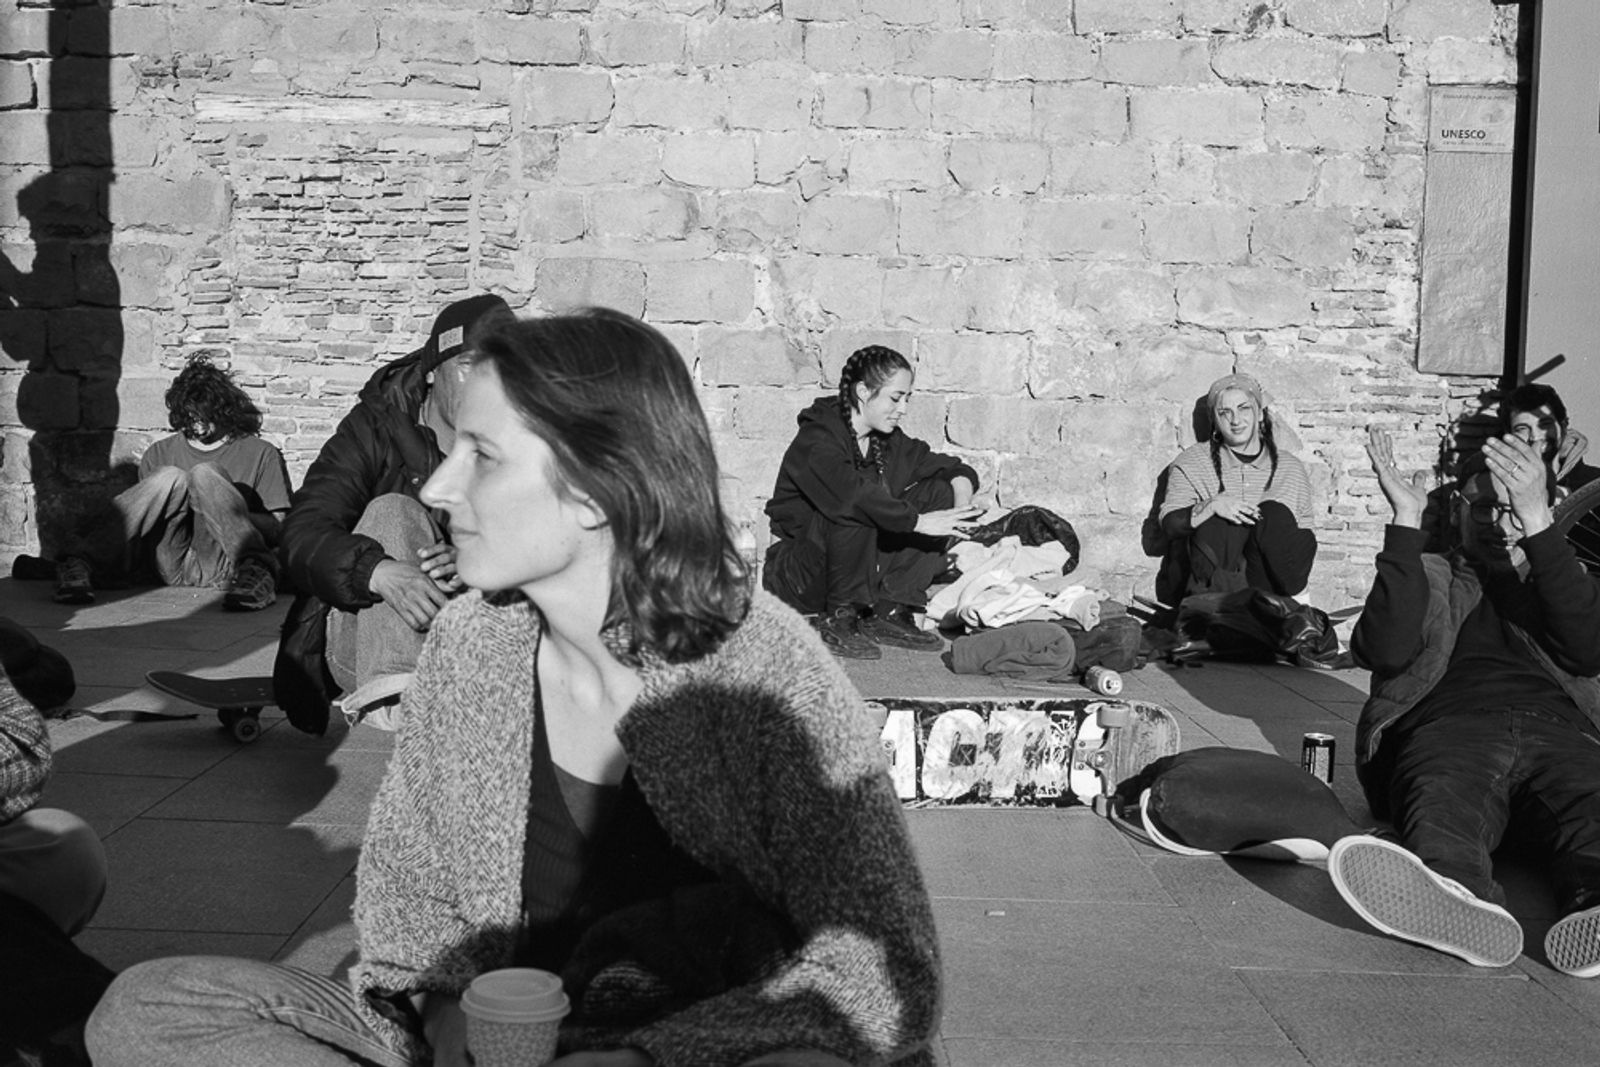 © Gloria Salgado Gispert - Image from the Barcelona un dia d'hivern photography project